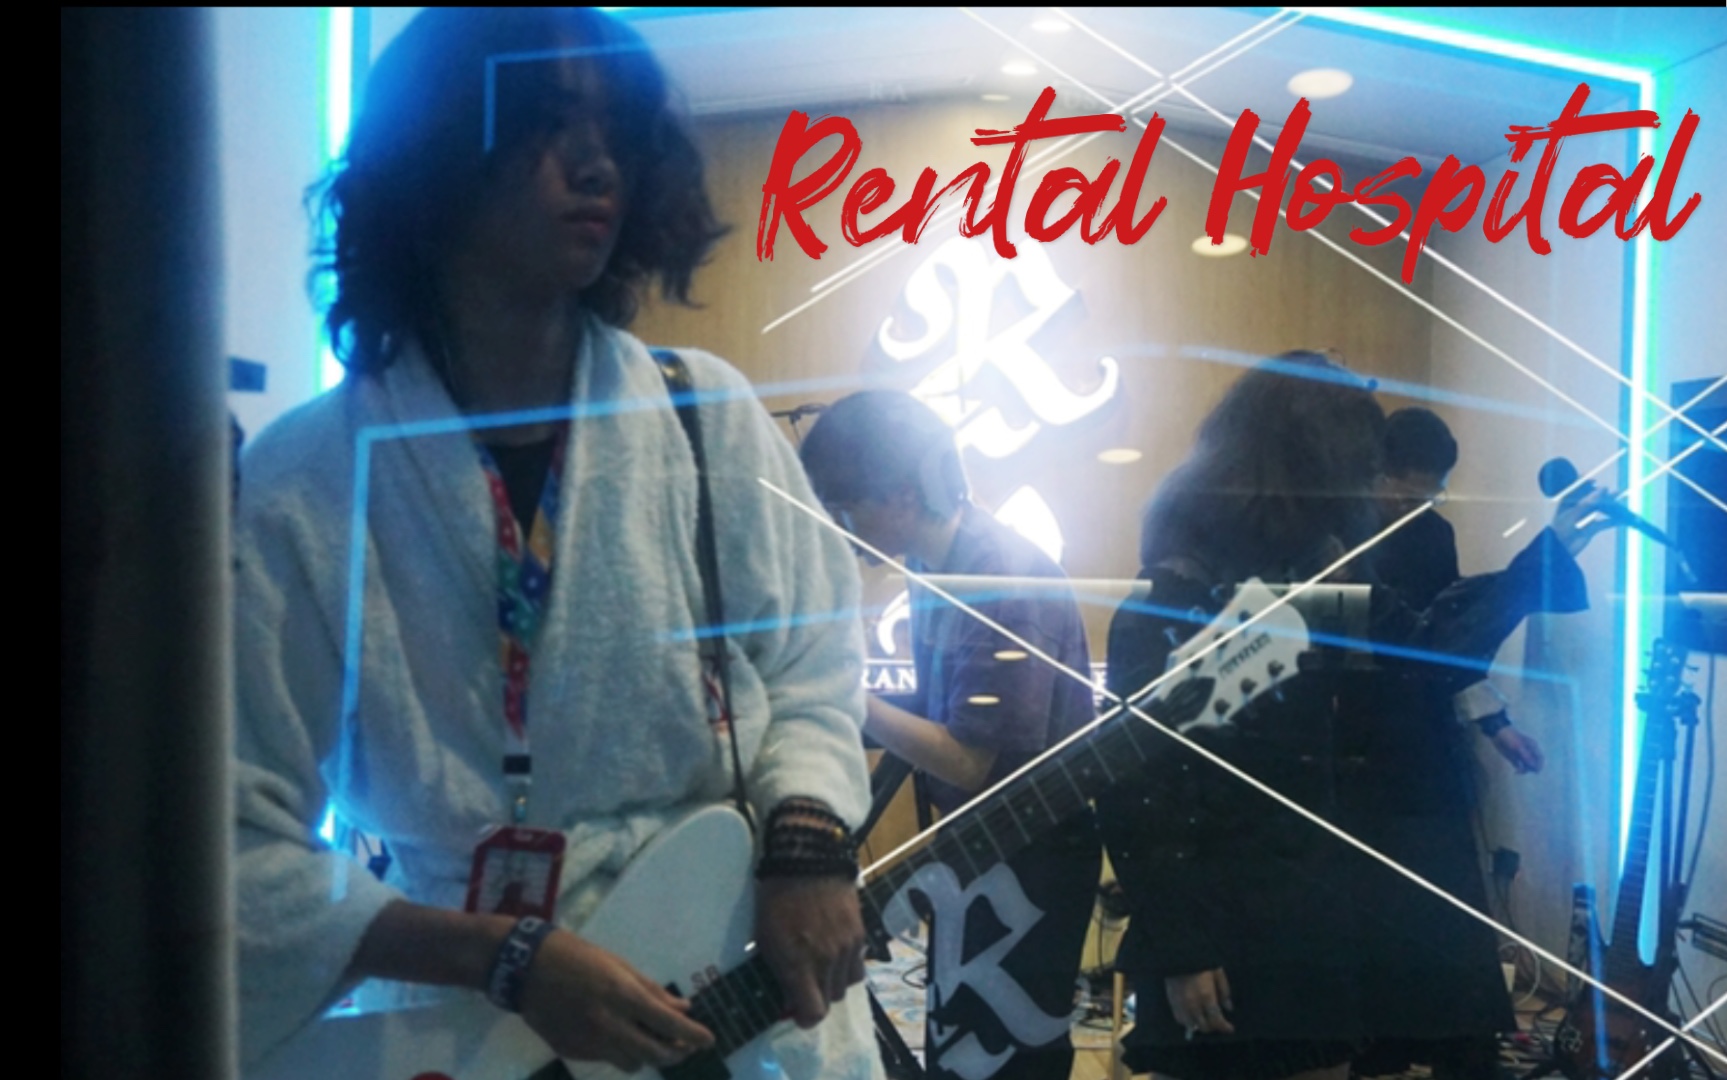 NIRVANA Random House— Rental Hospital‘s second gig （记得